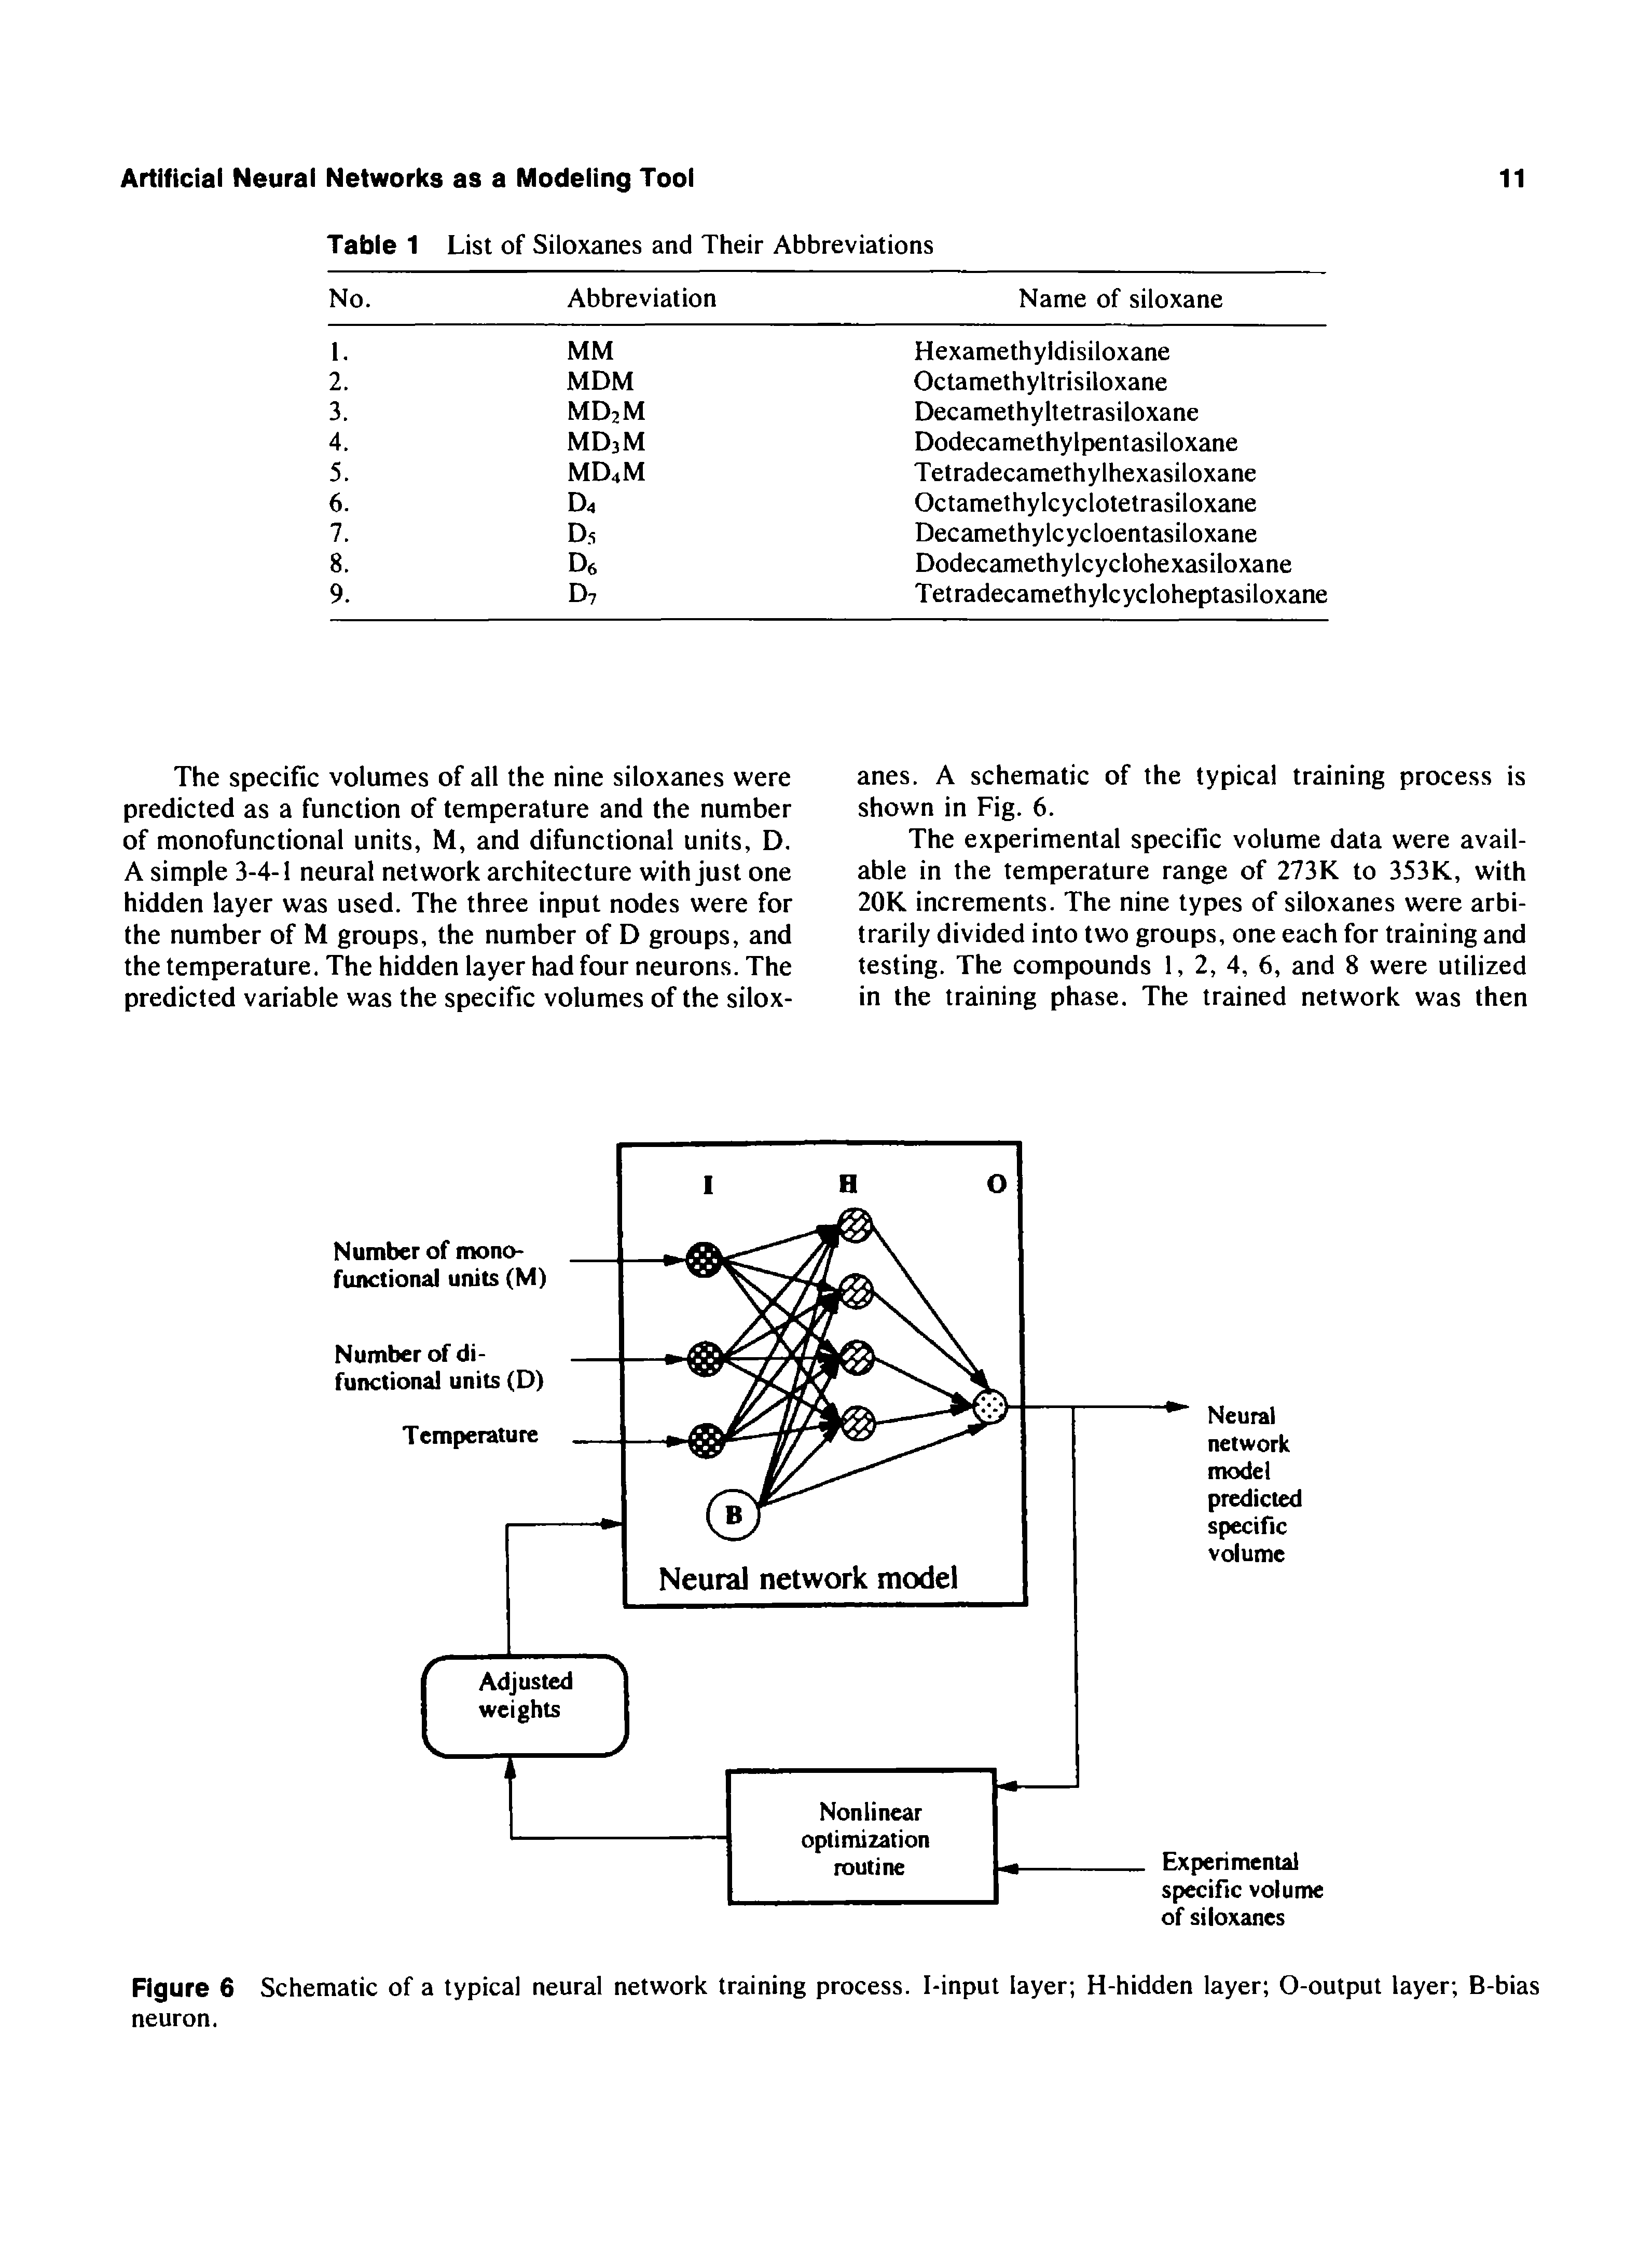 Figure 6 Schematic of a typical neural network training process. I-input layer H-hidden layer 0-output layer B-bias neuron.